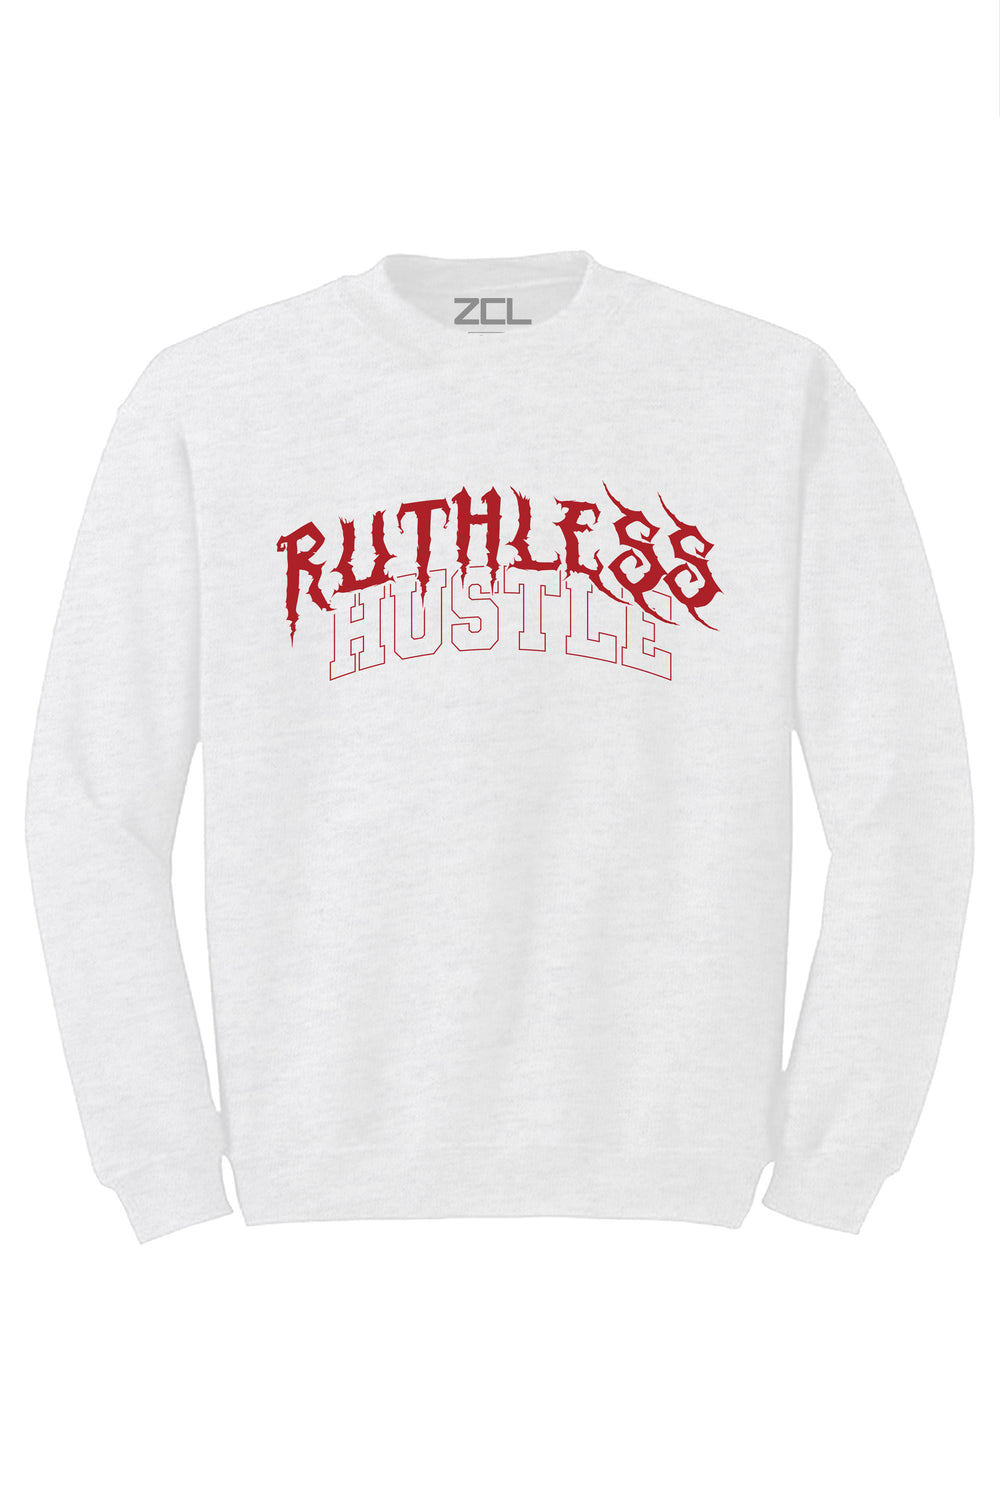 Ruthless Hustle Crewneck Sweatshirt (Red Logo)